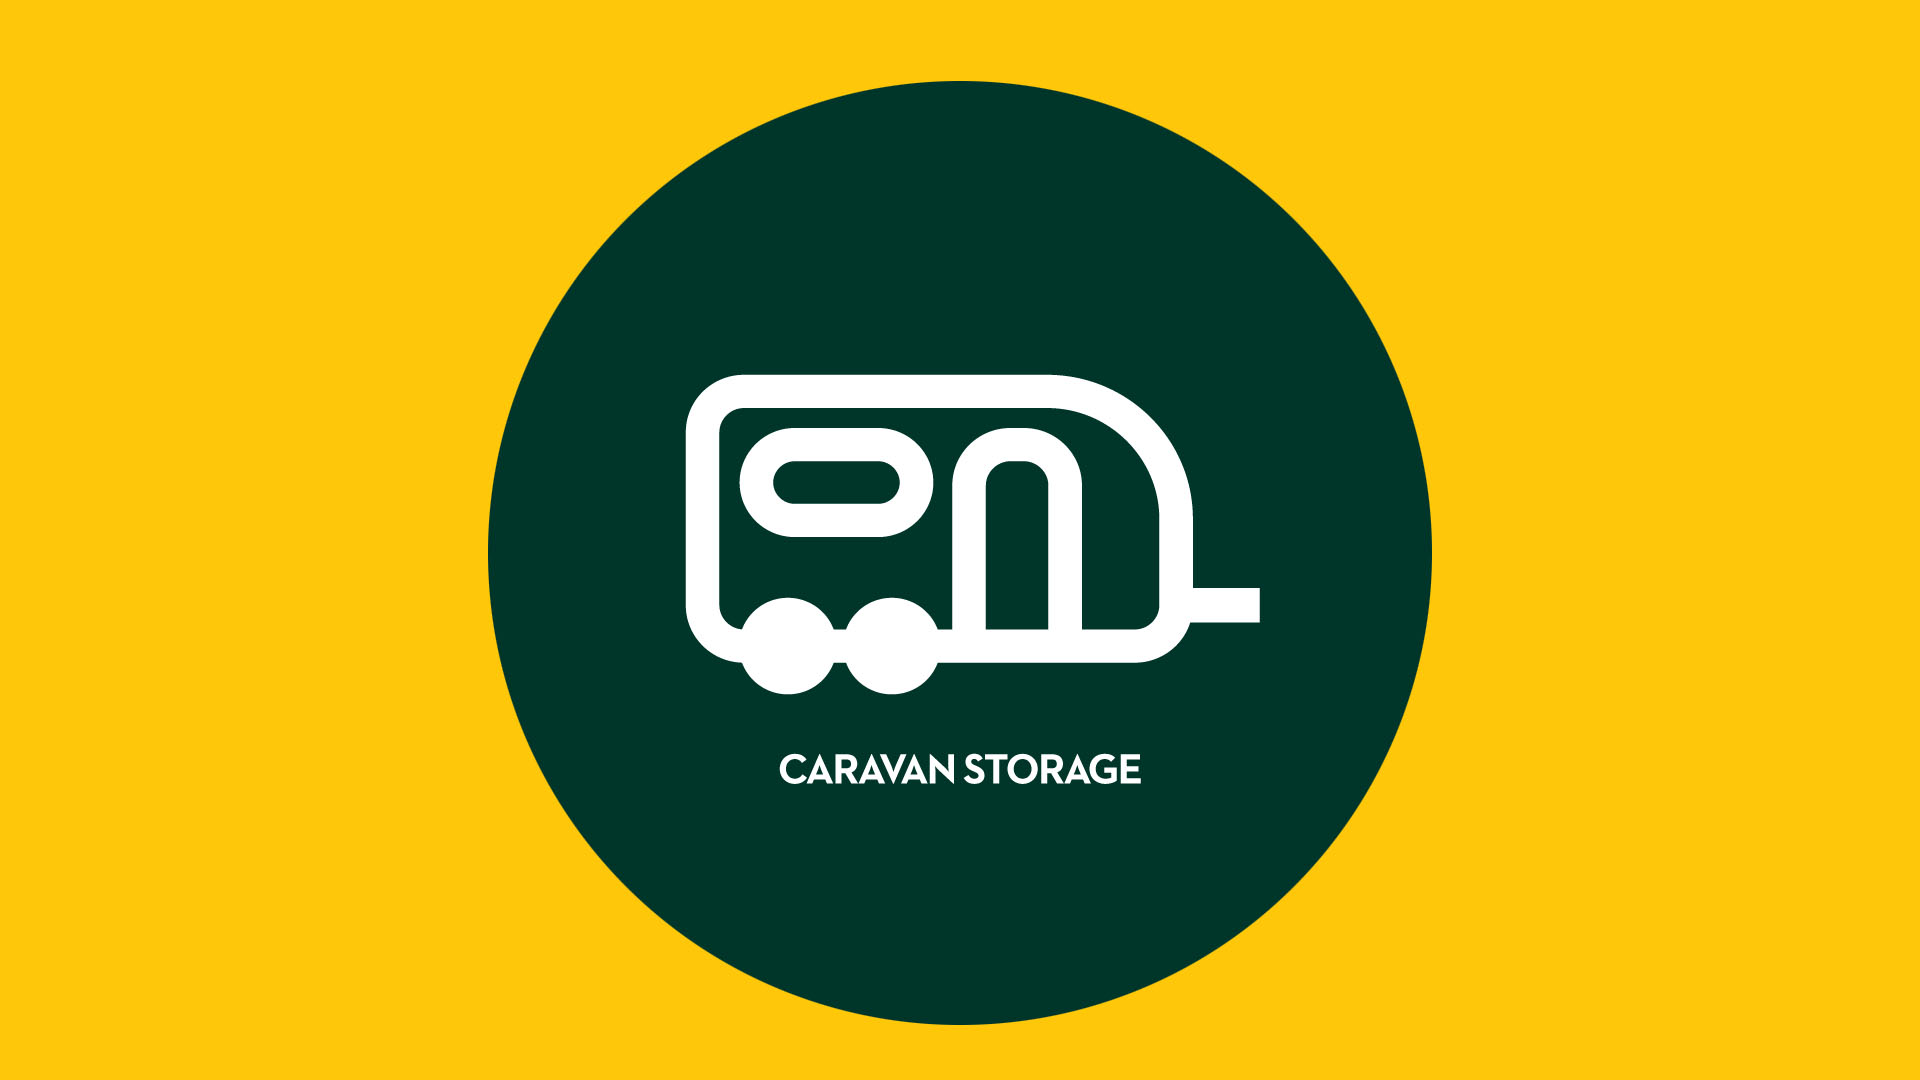 Caravan Storage - Secure Self Storage, Cramlington, Northumberland 01